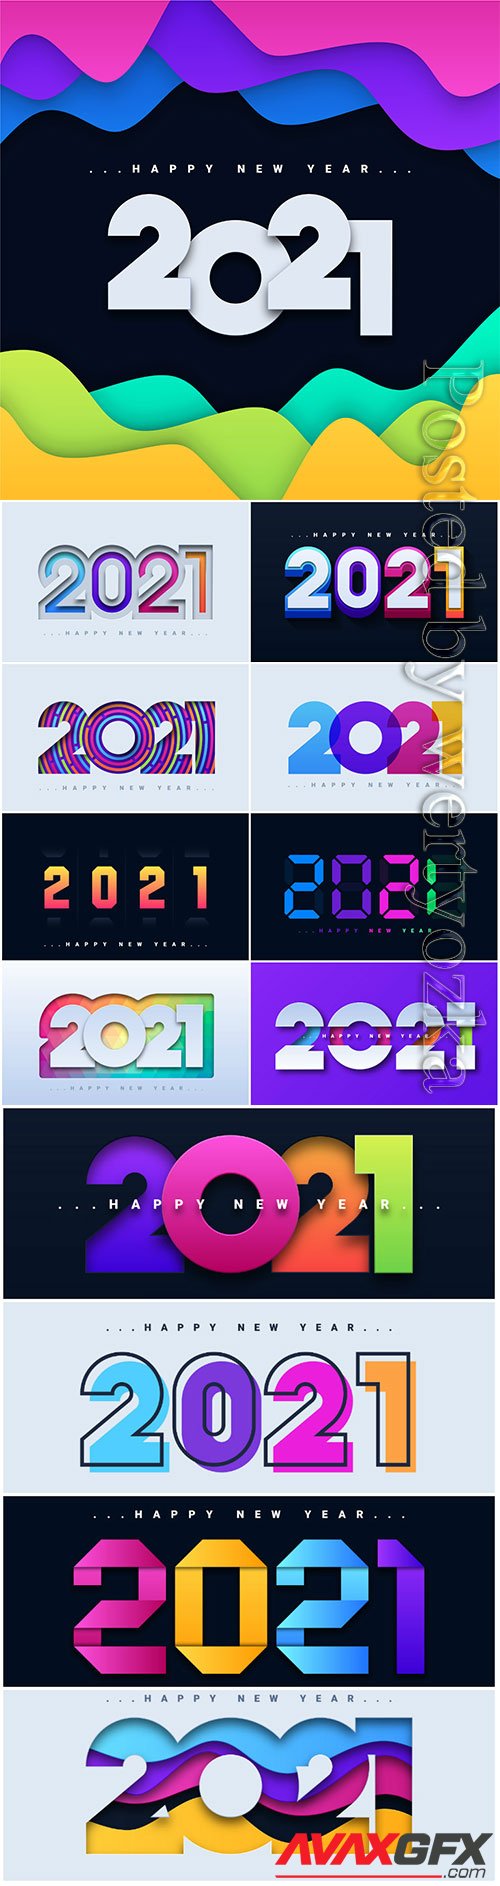 Modern happy 2021 new year greeting card